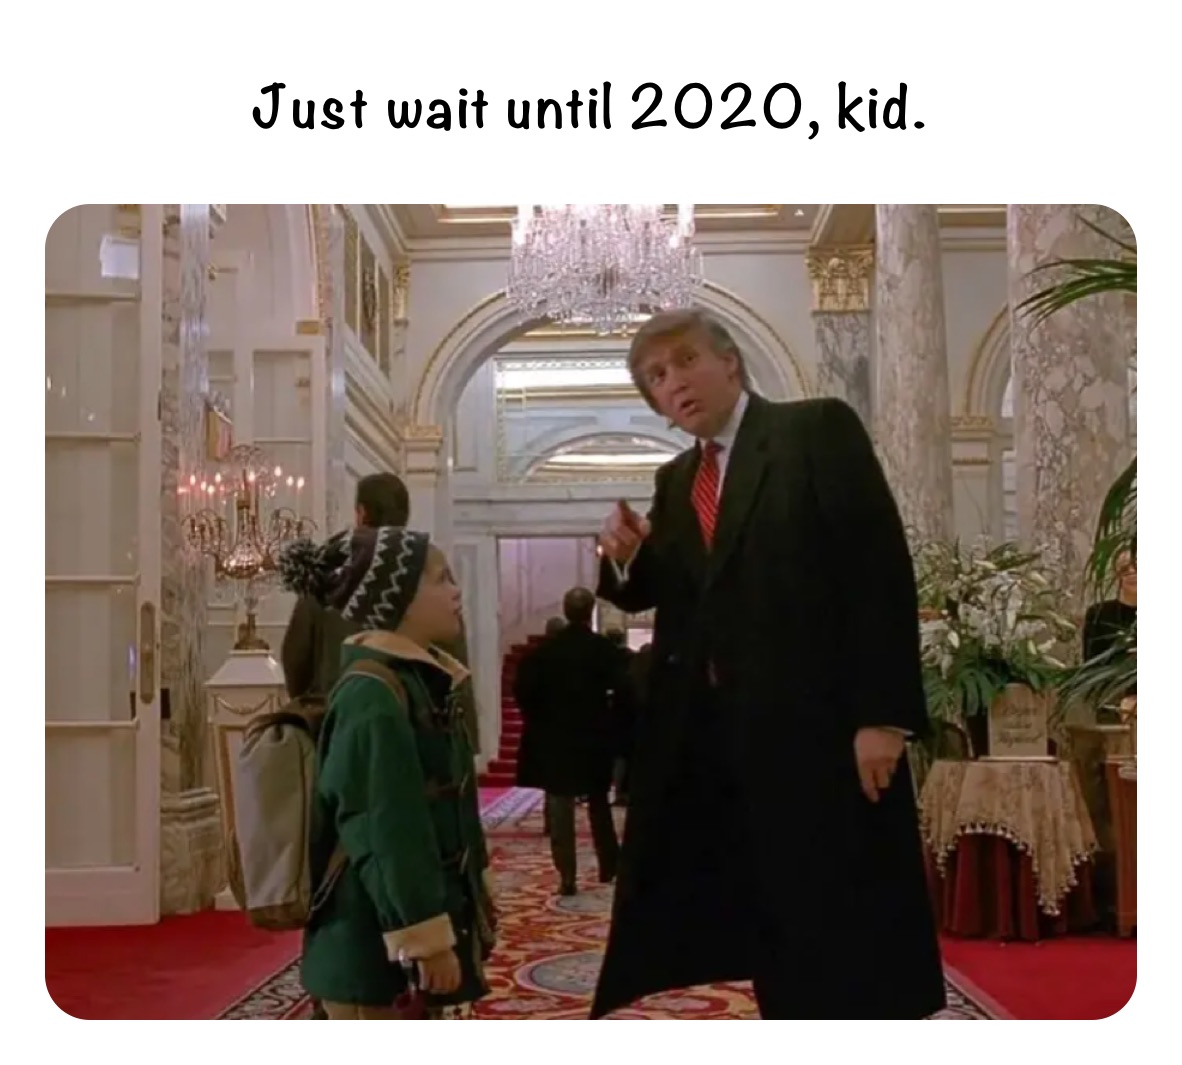 Just wait until 2020, kid.